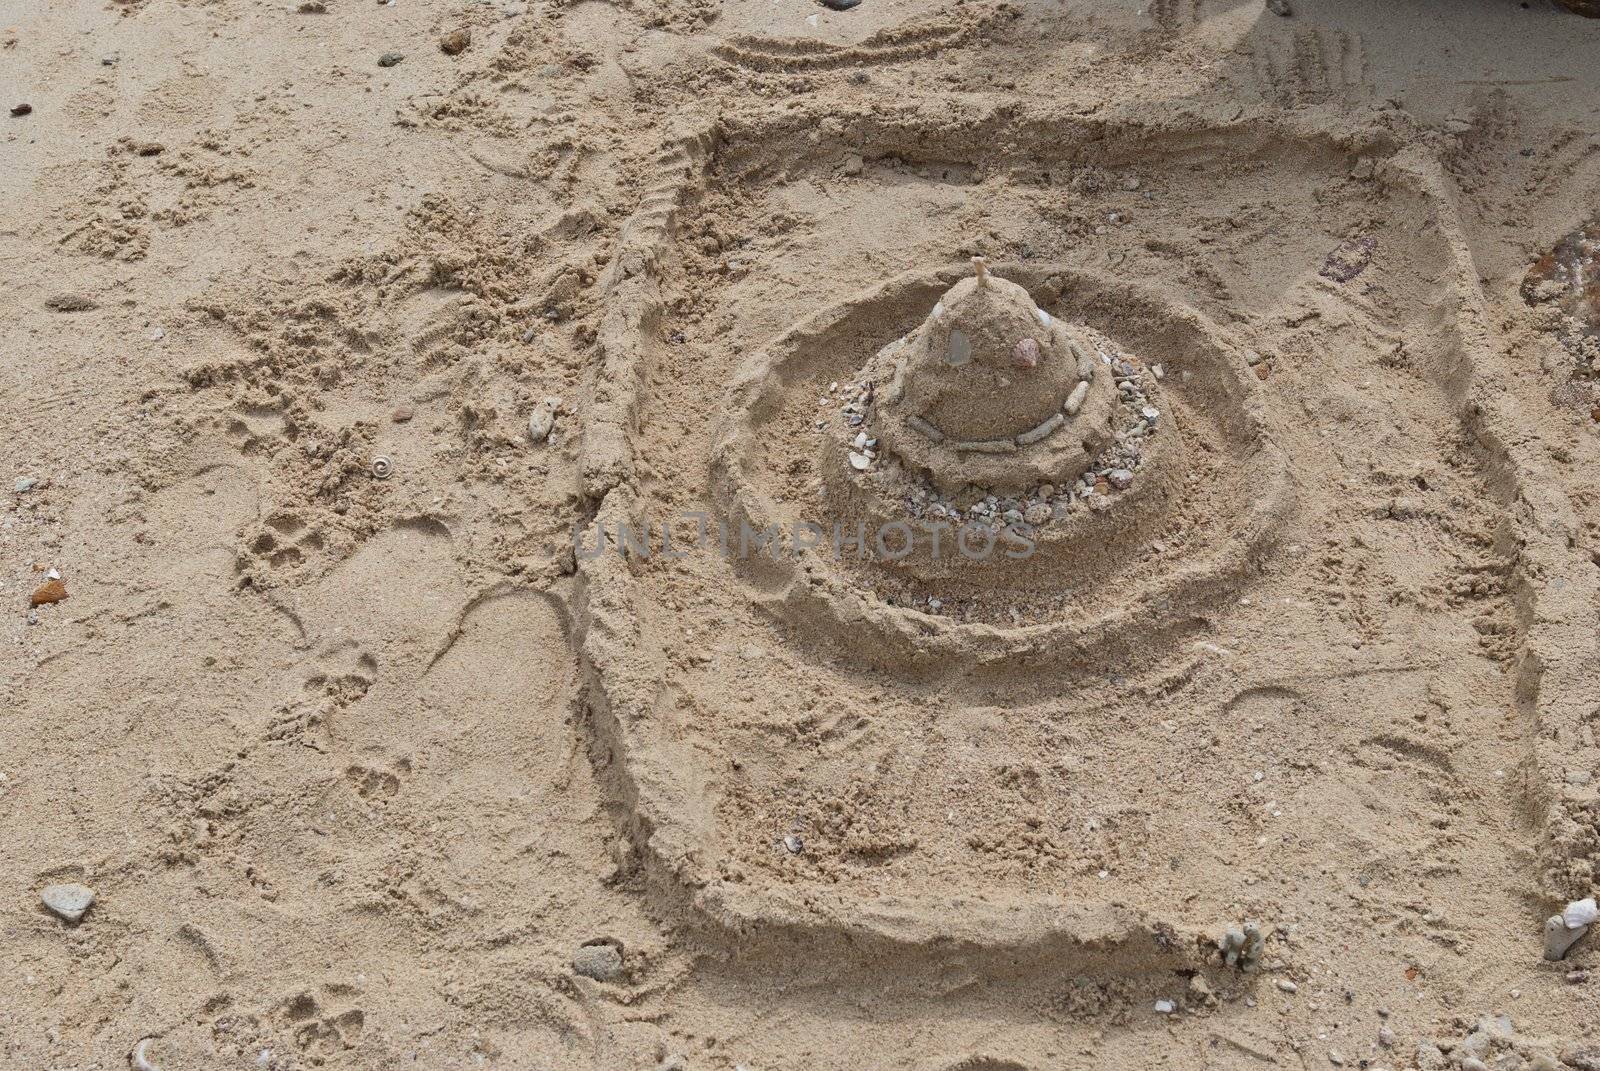 Sand Castle on the Beach by sasilsolutions